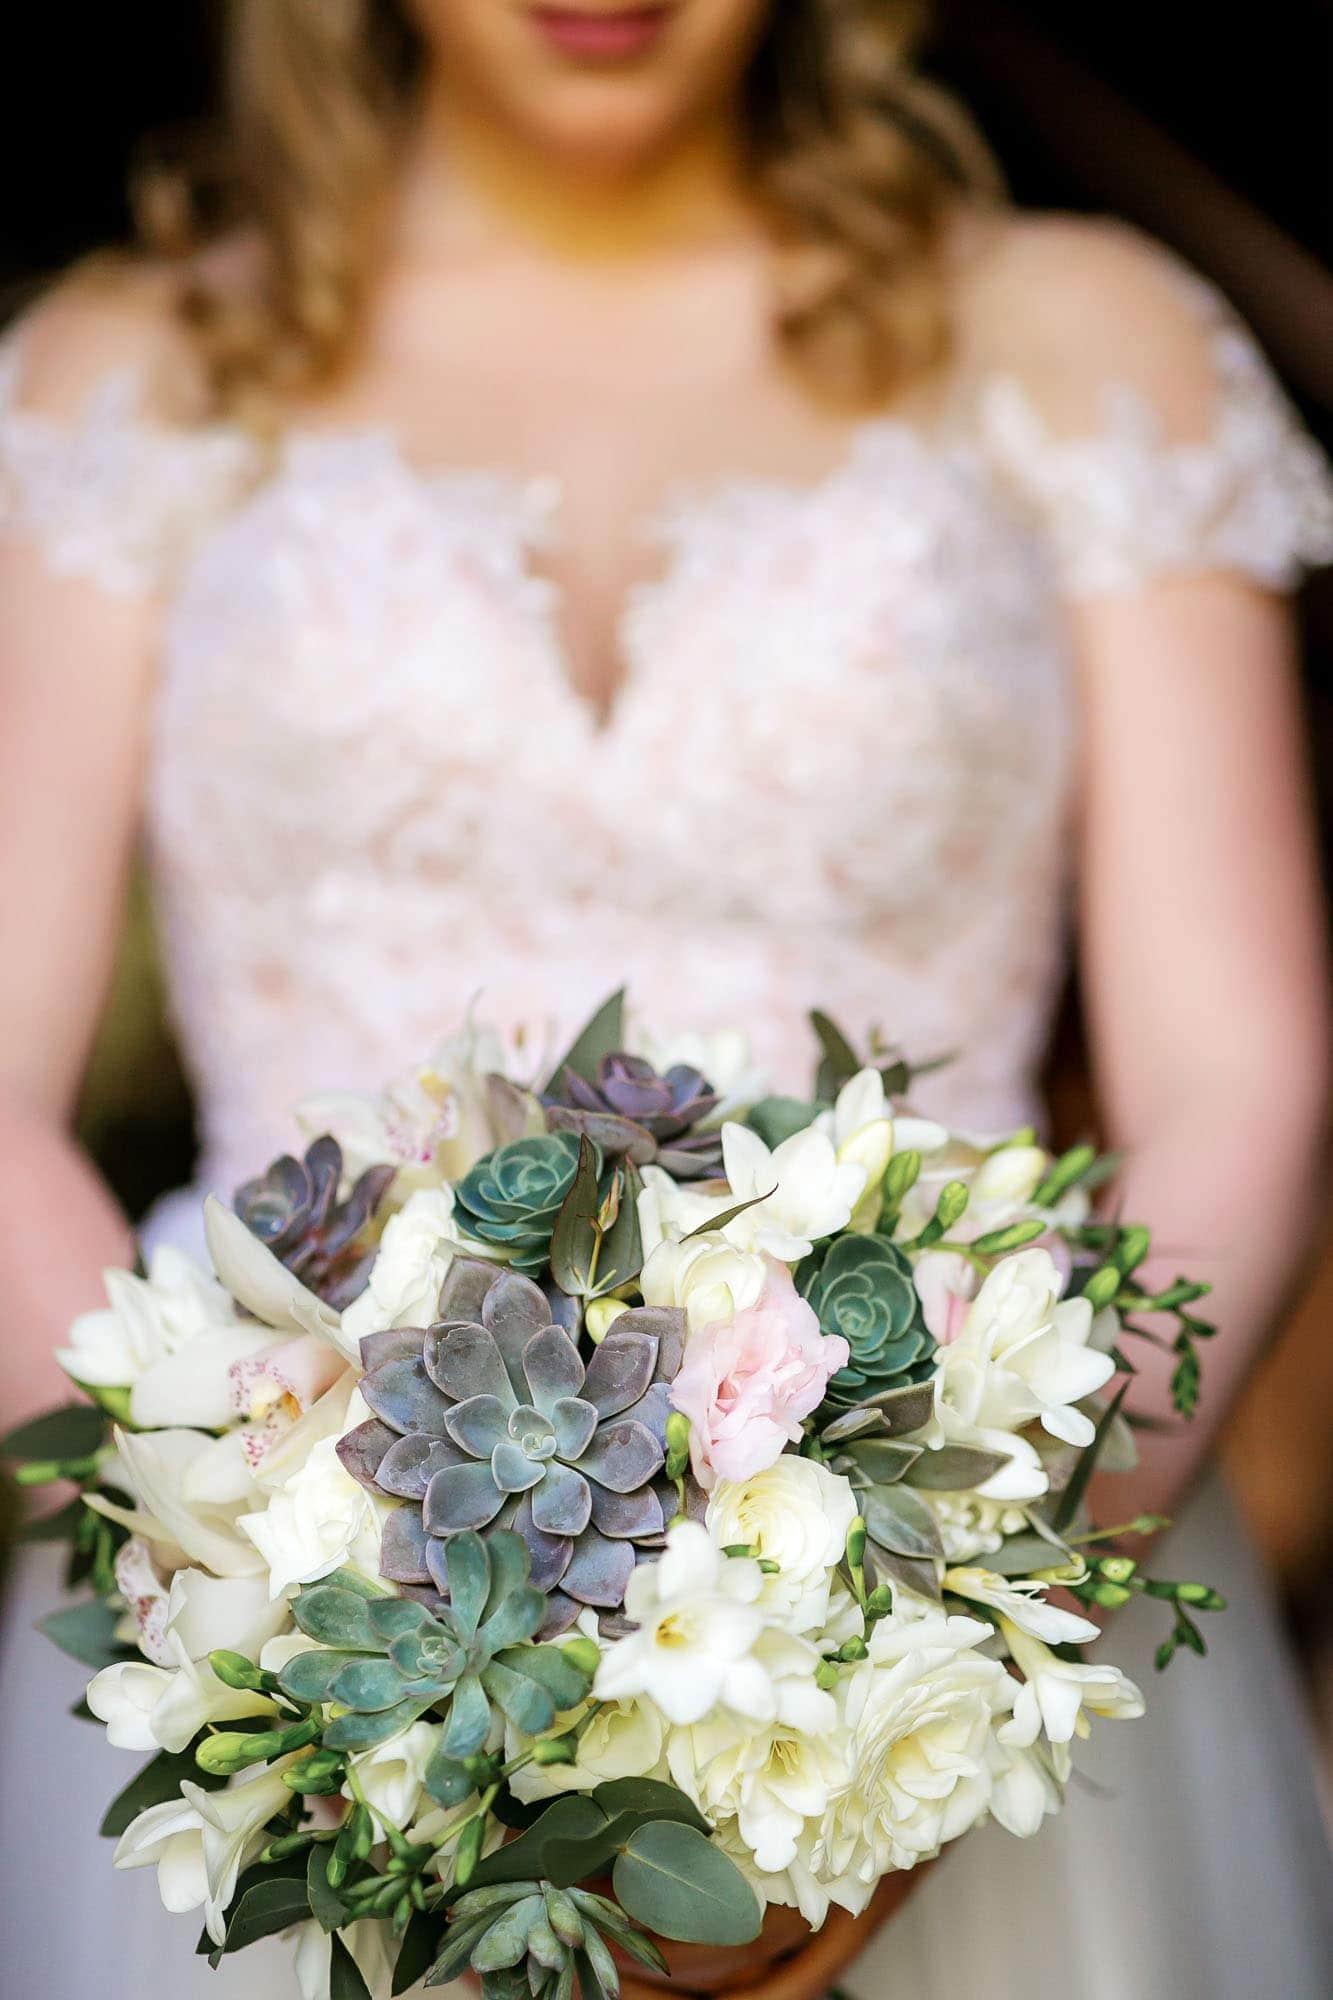 Closeup of the bride's unique bouquet in her hands